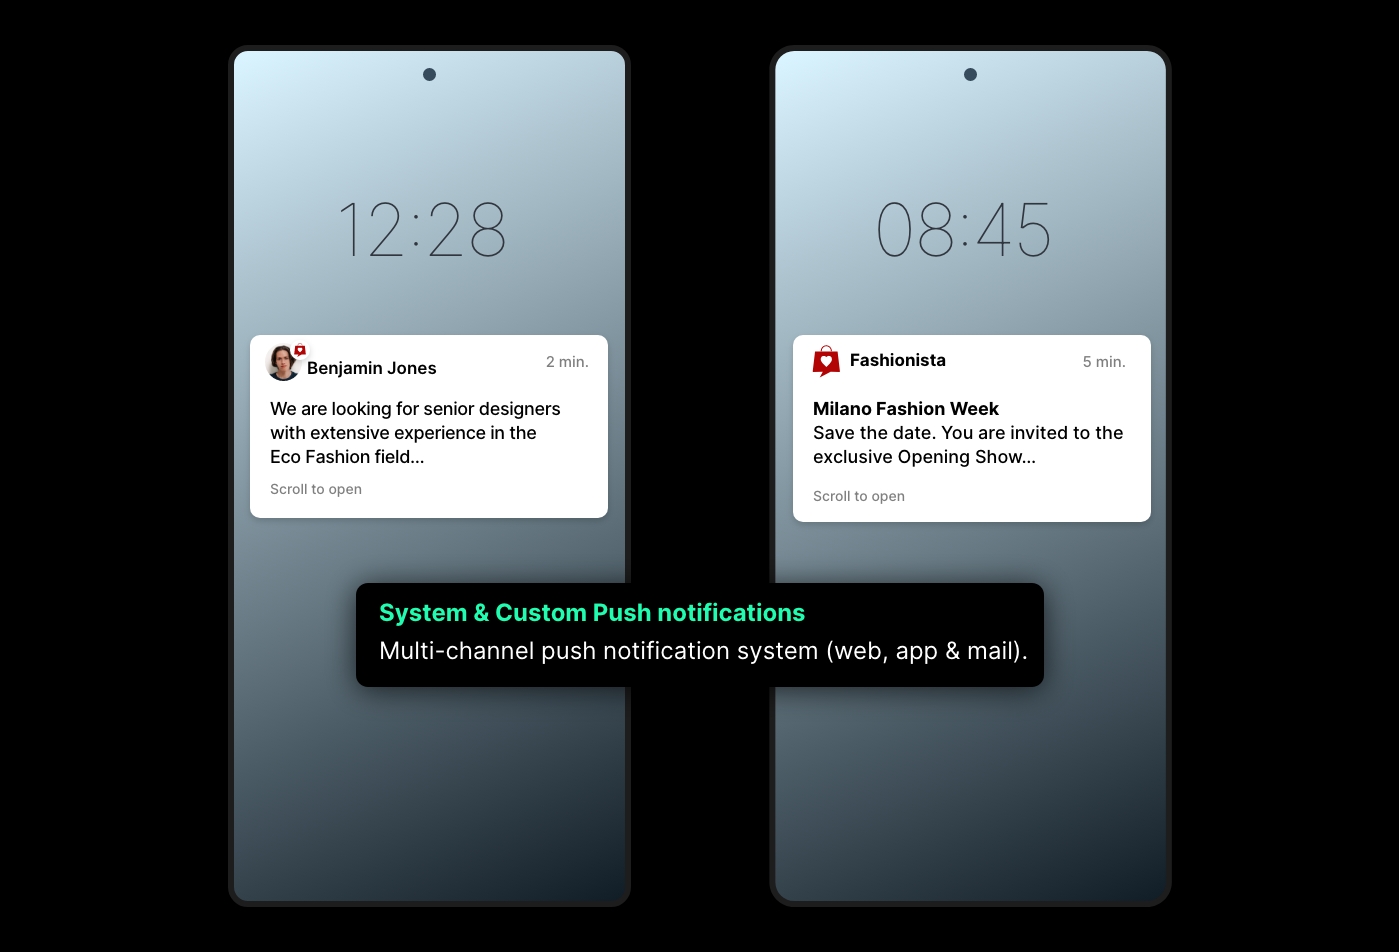 System & Custom Push notifications: Multi-channel push notification system (web, app & mail).